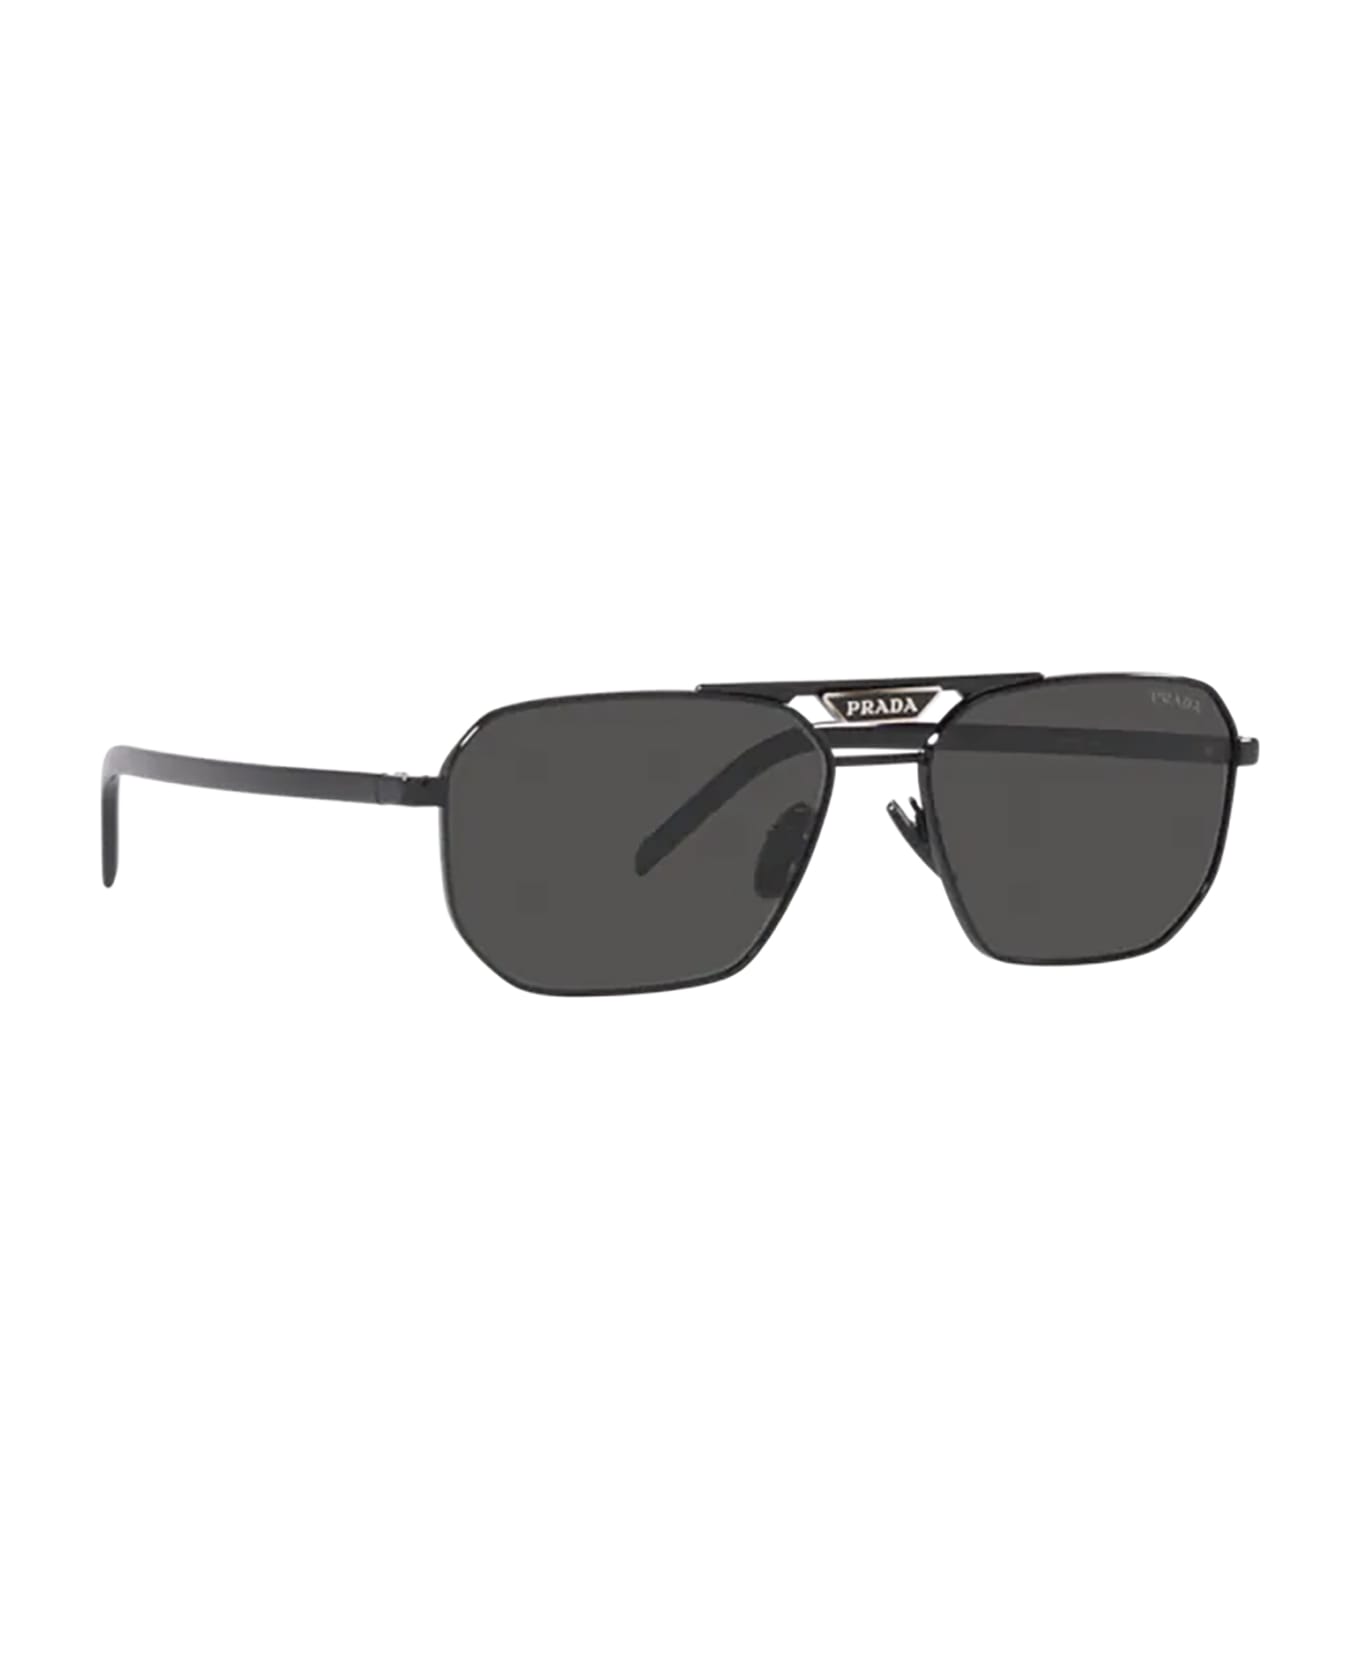 Prada Eyewear Pr 58ys Black Sunglasses - Black